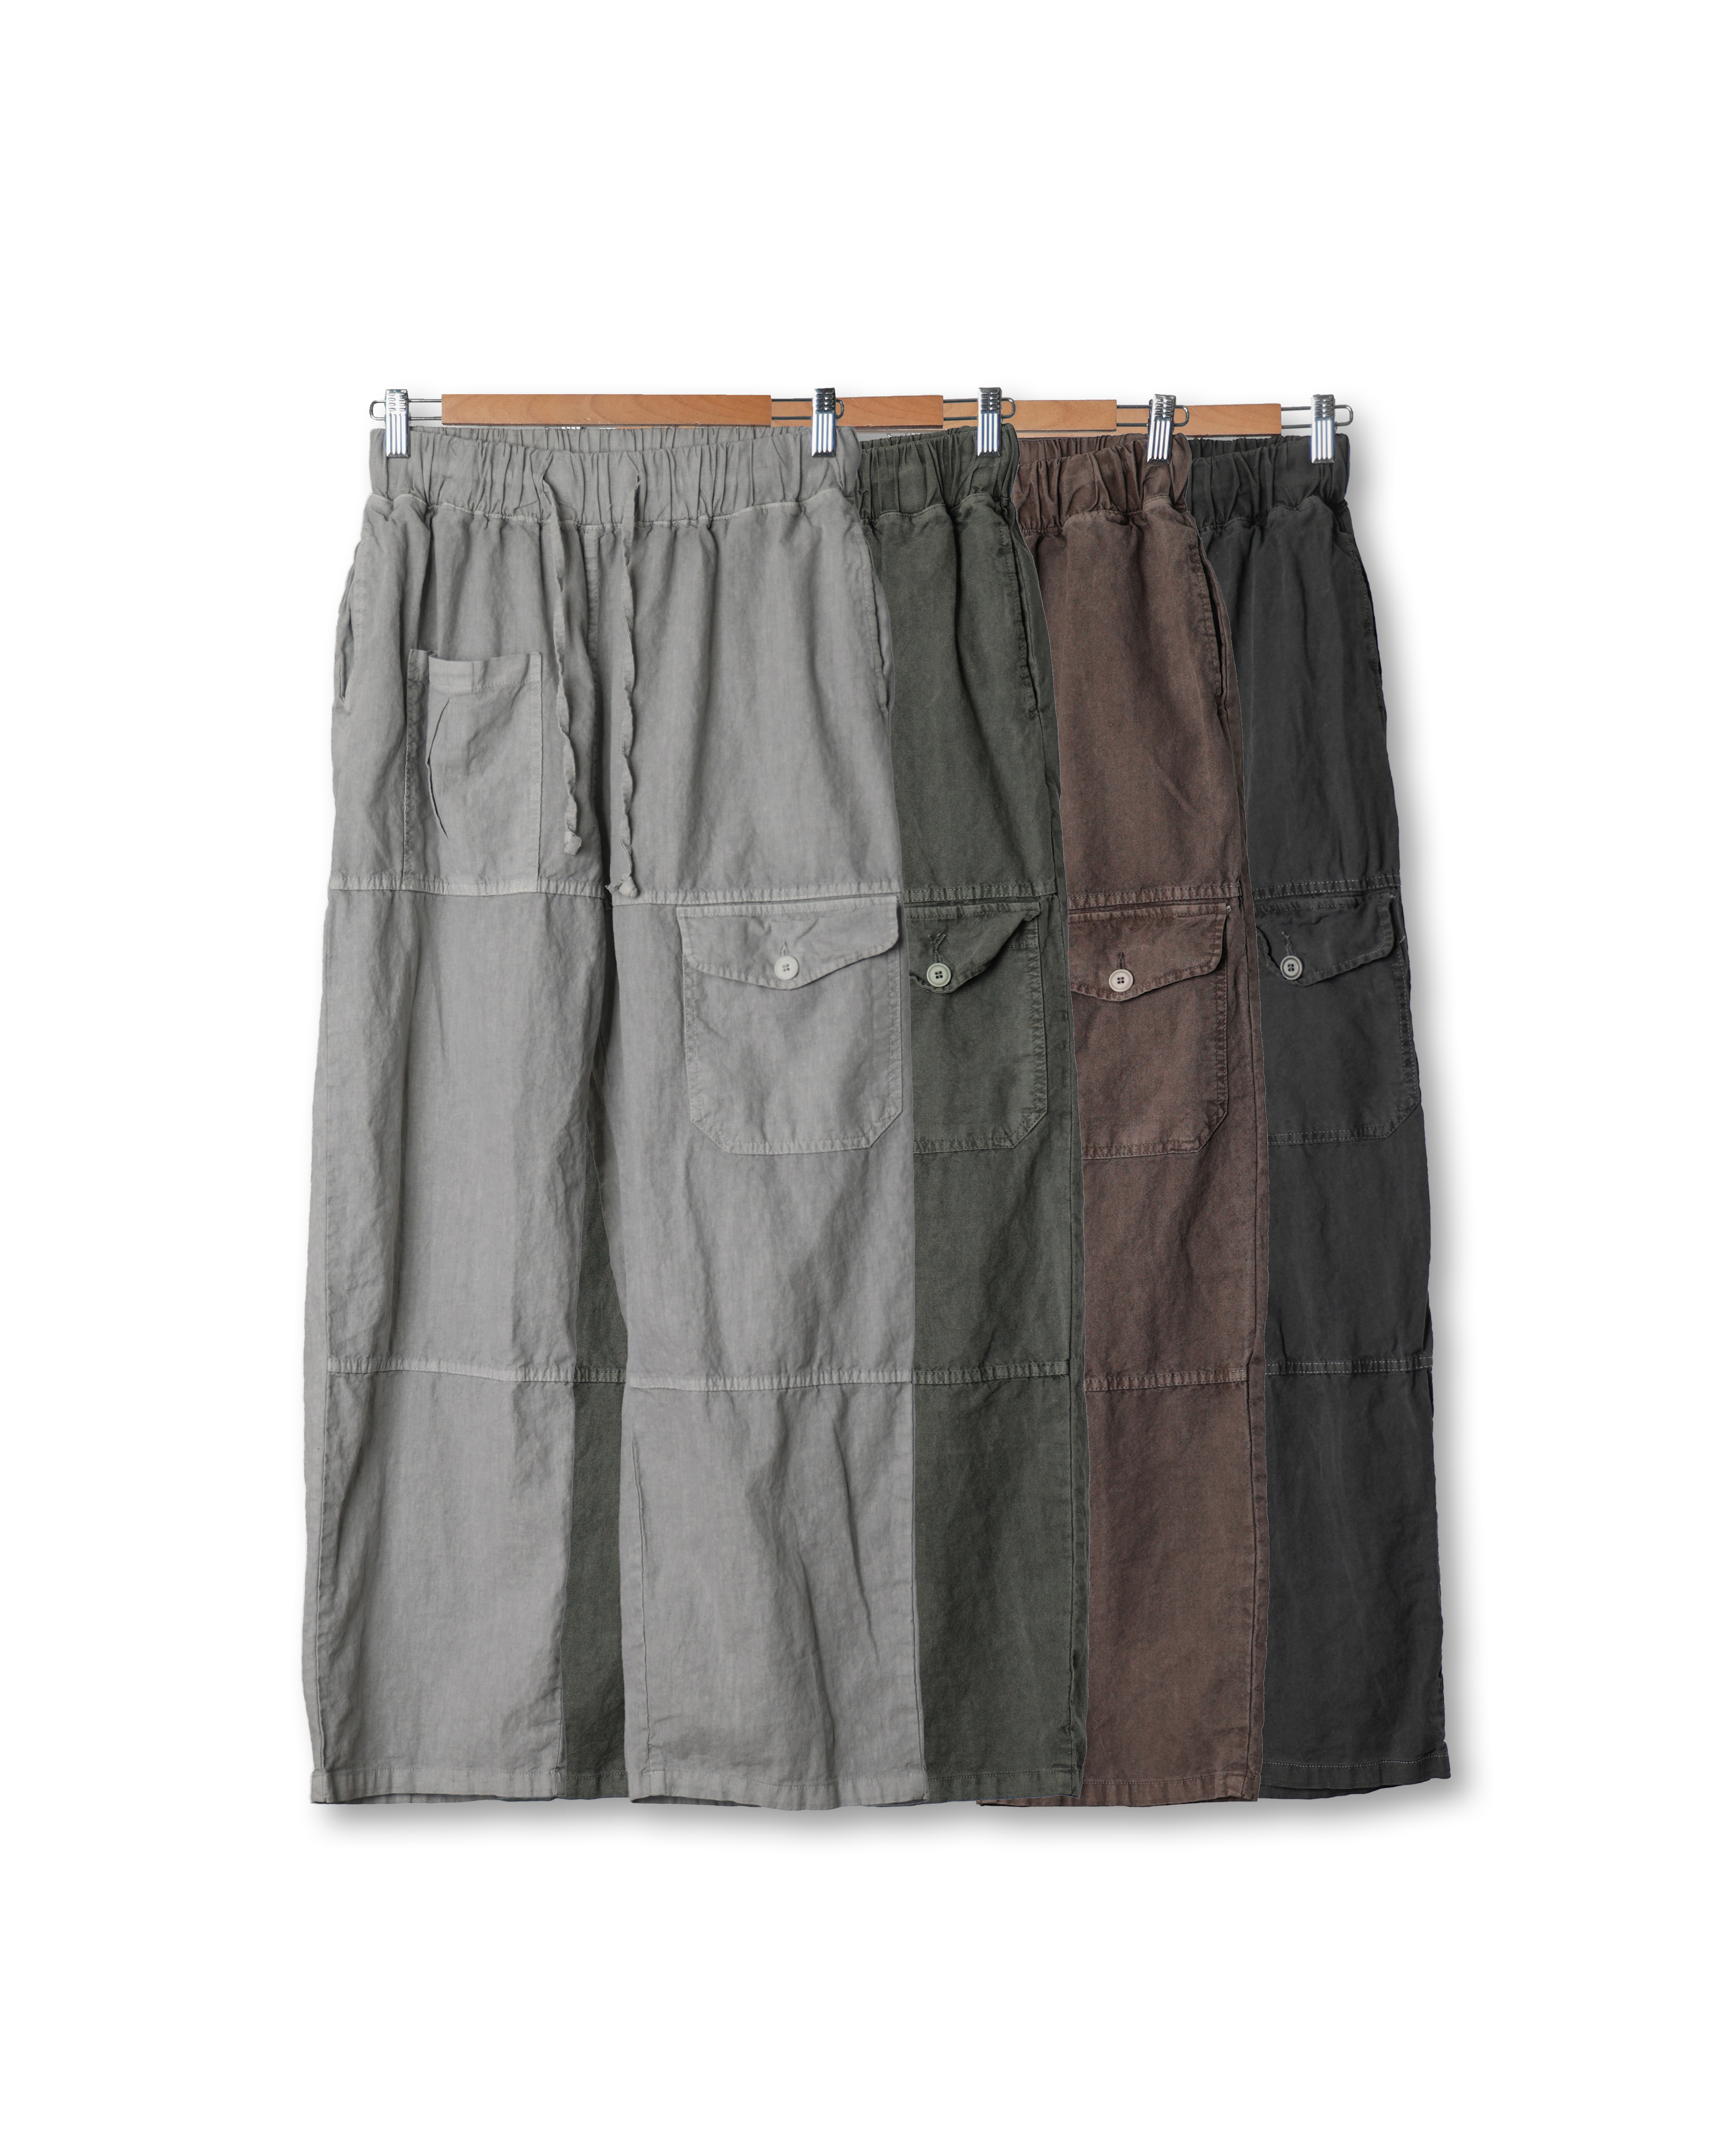 GAUZ MAFI Linen Washed Pocket Pants (Charcoal/Gray/Brown/Olive) - 3차 리오더 (브라운 5/14 배송예정)